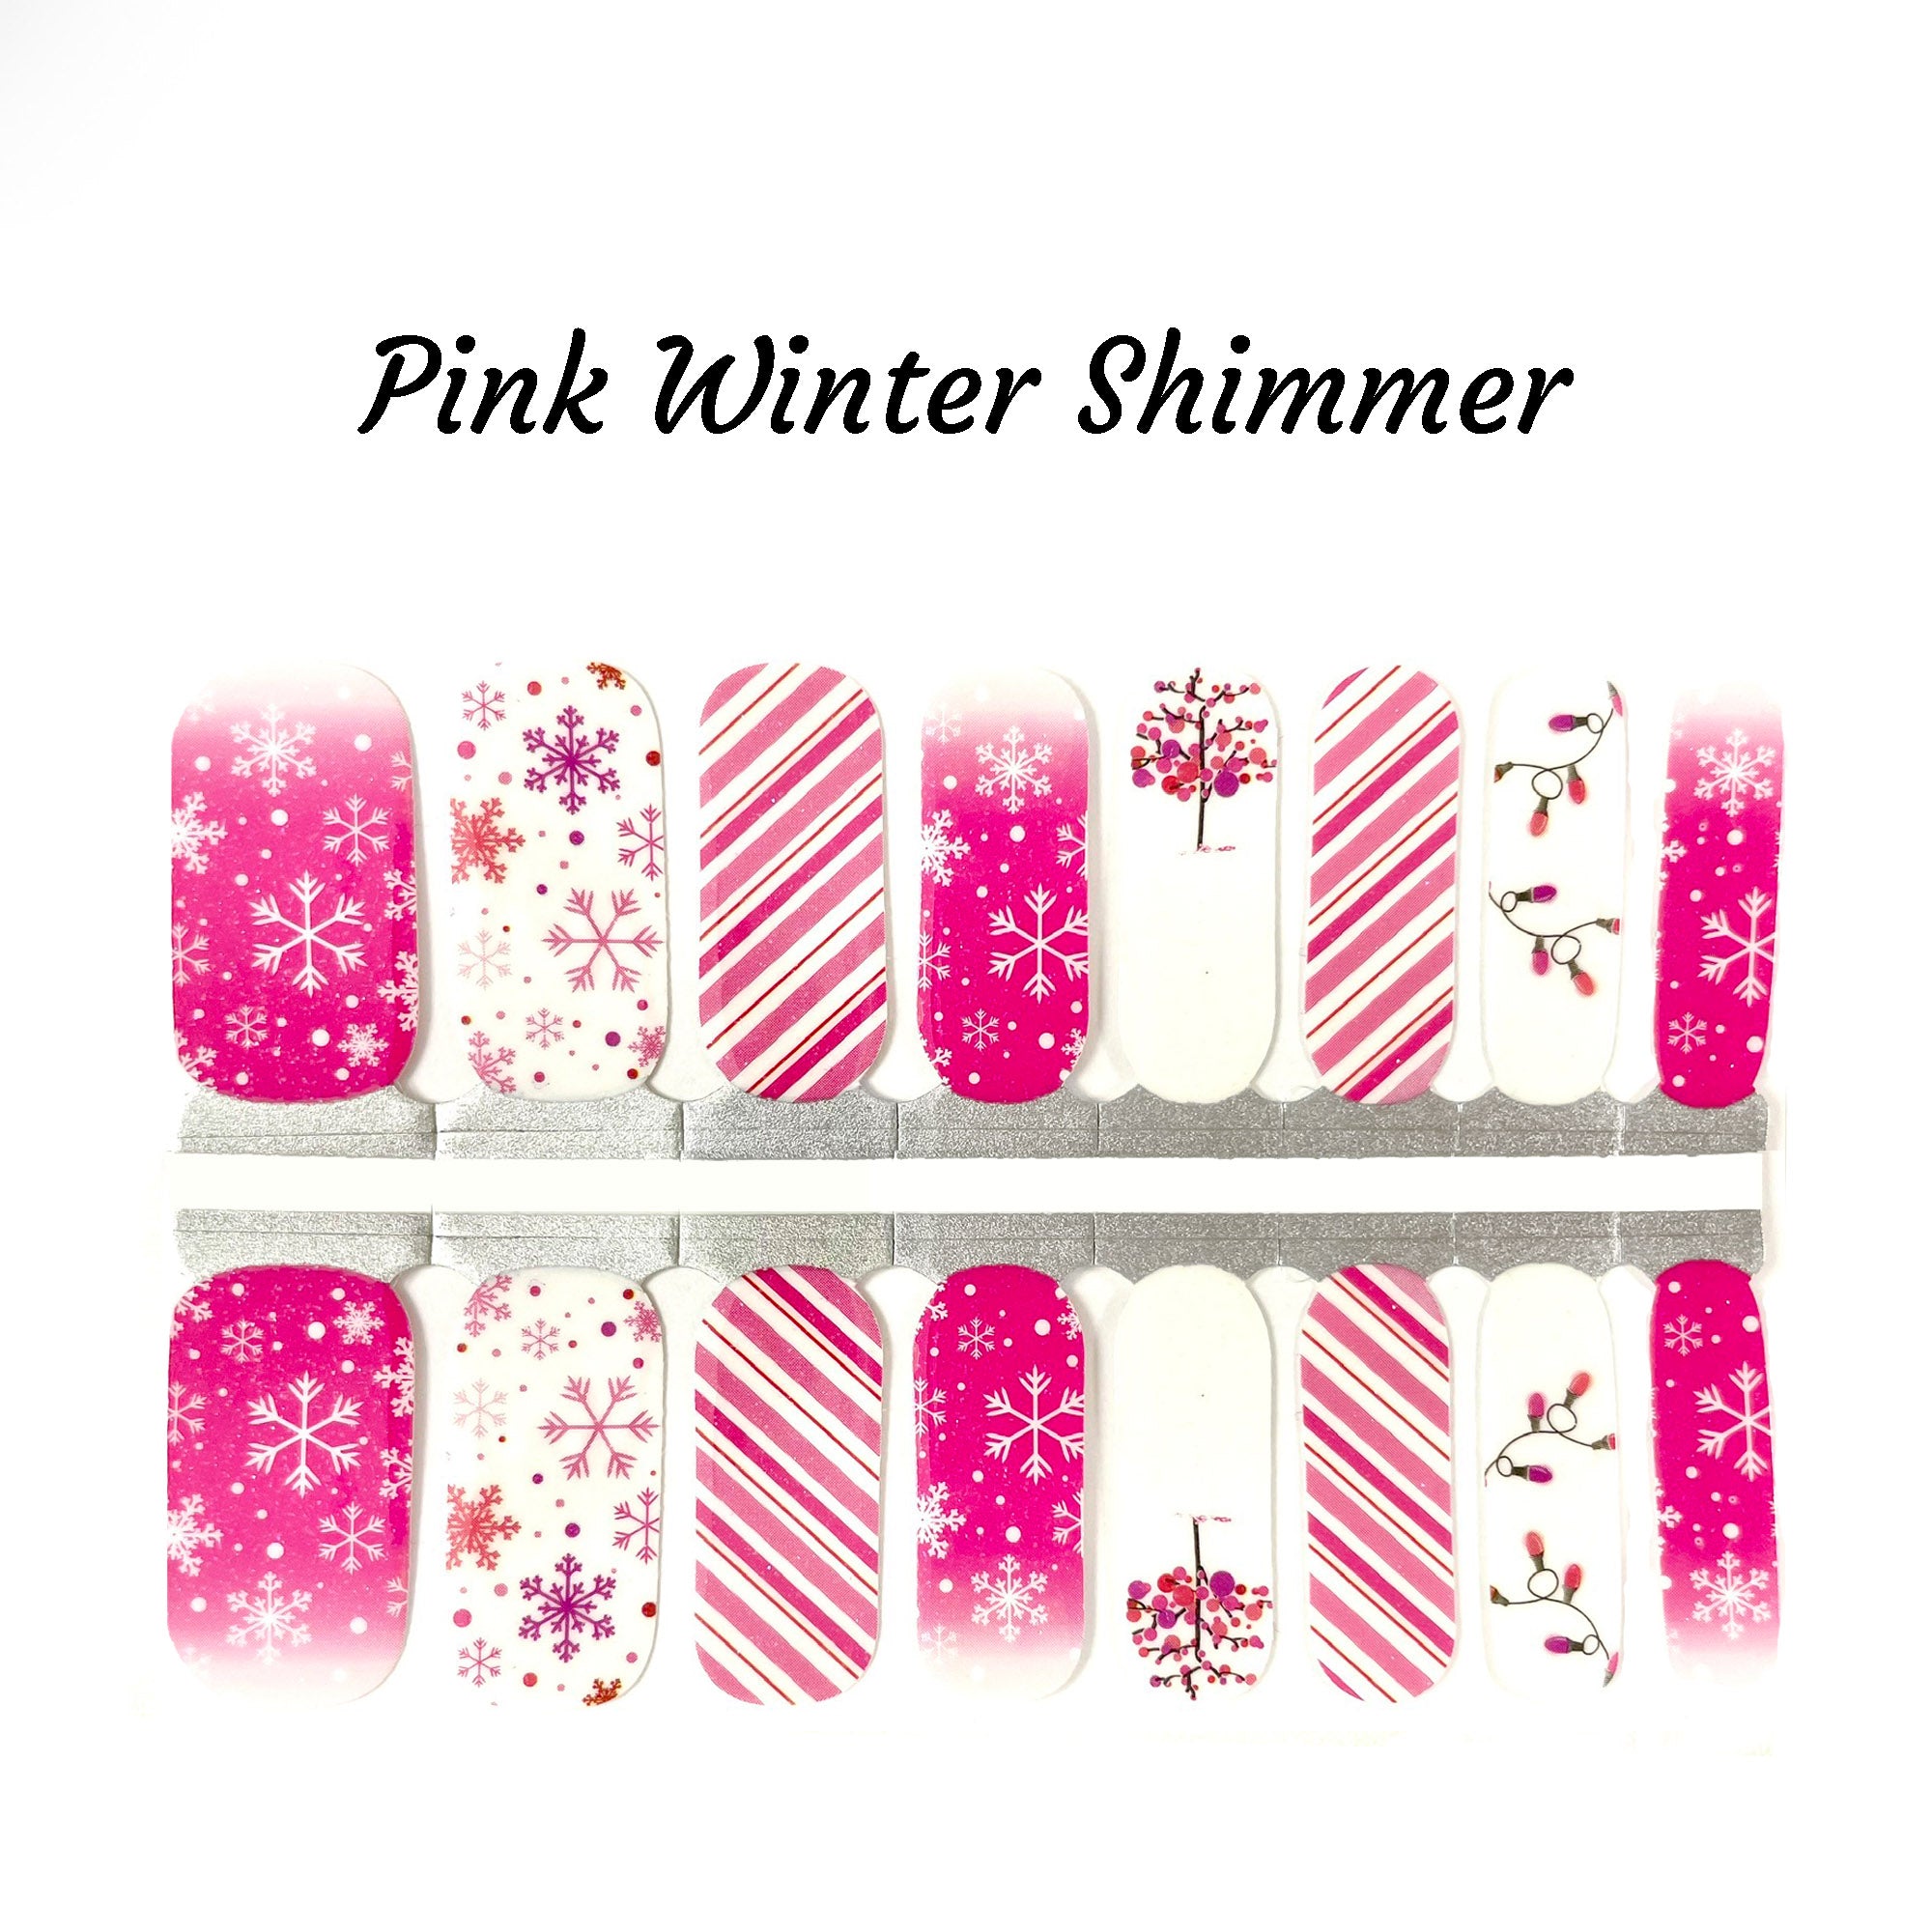 Pink Winter Shimmer